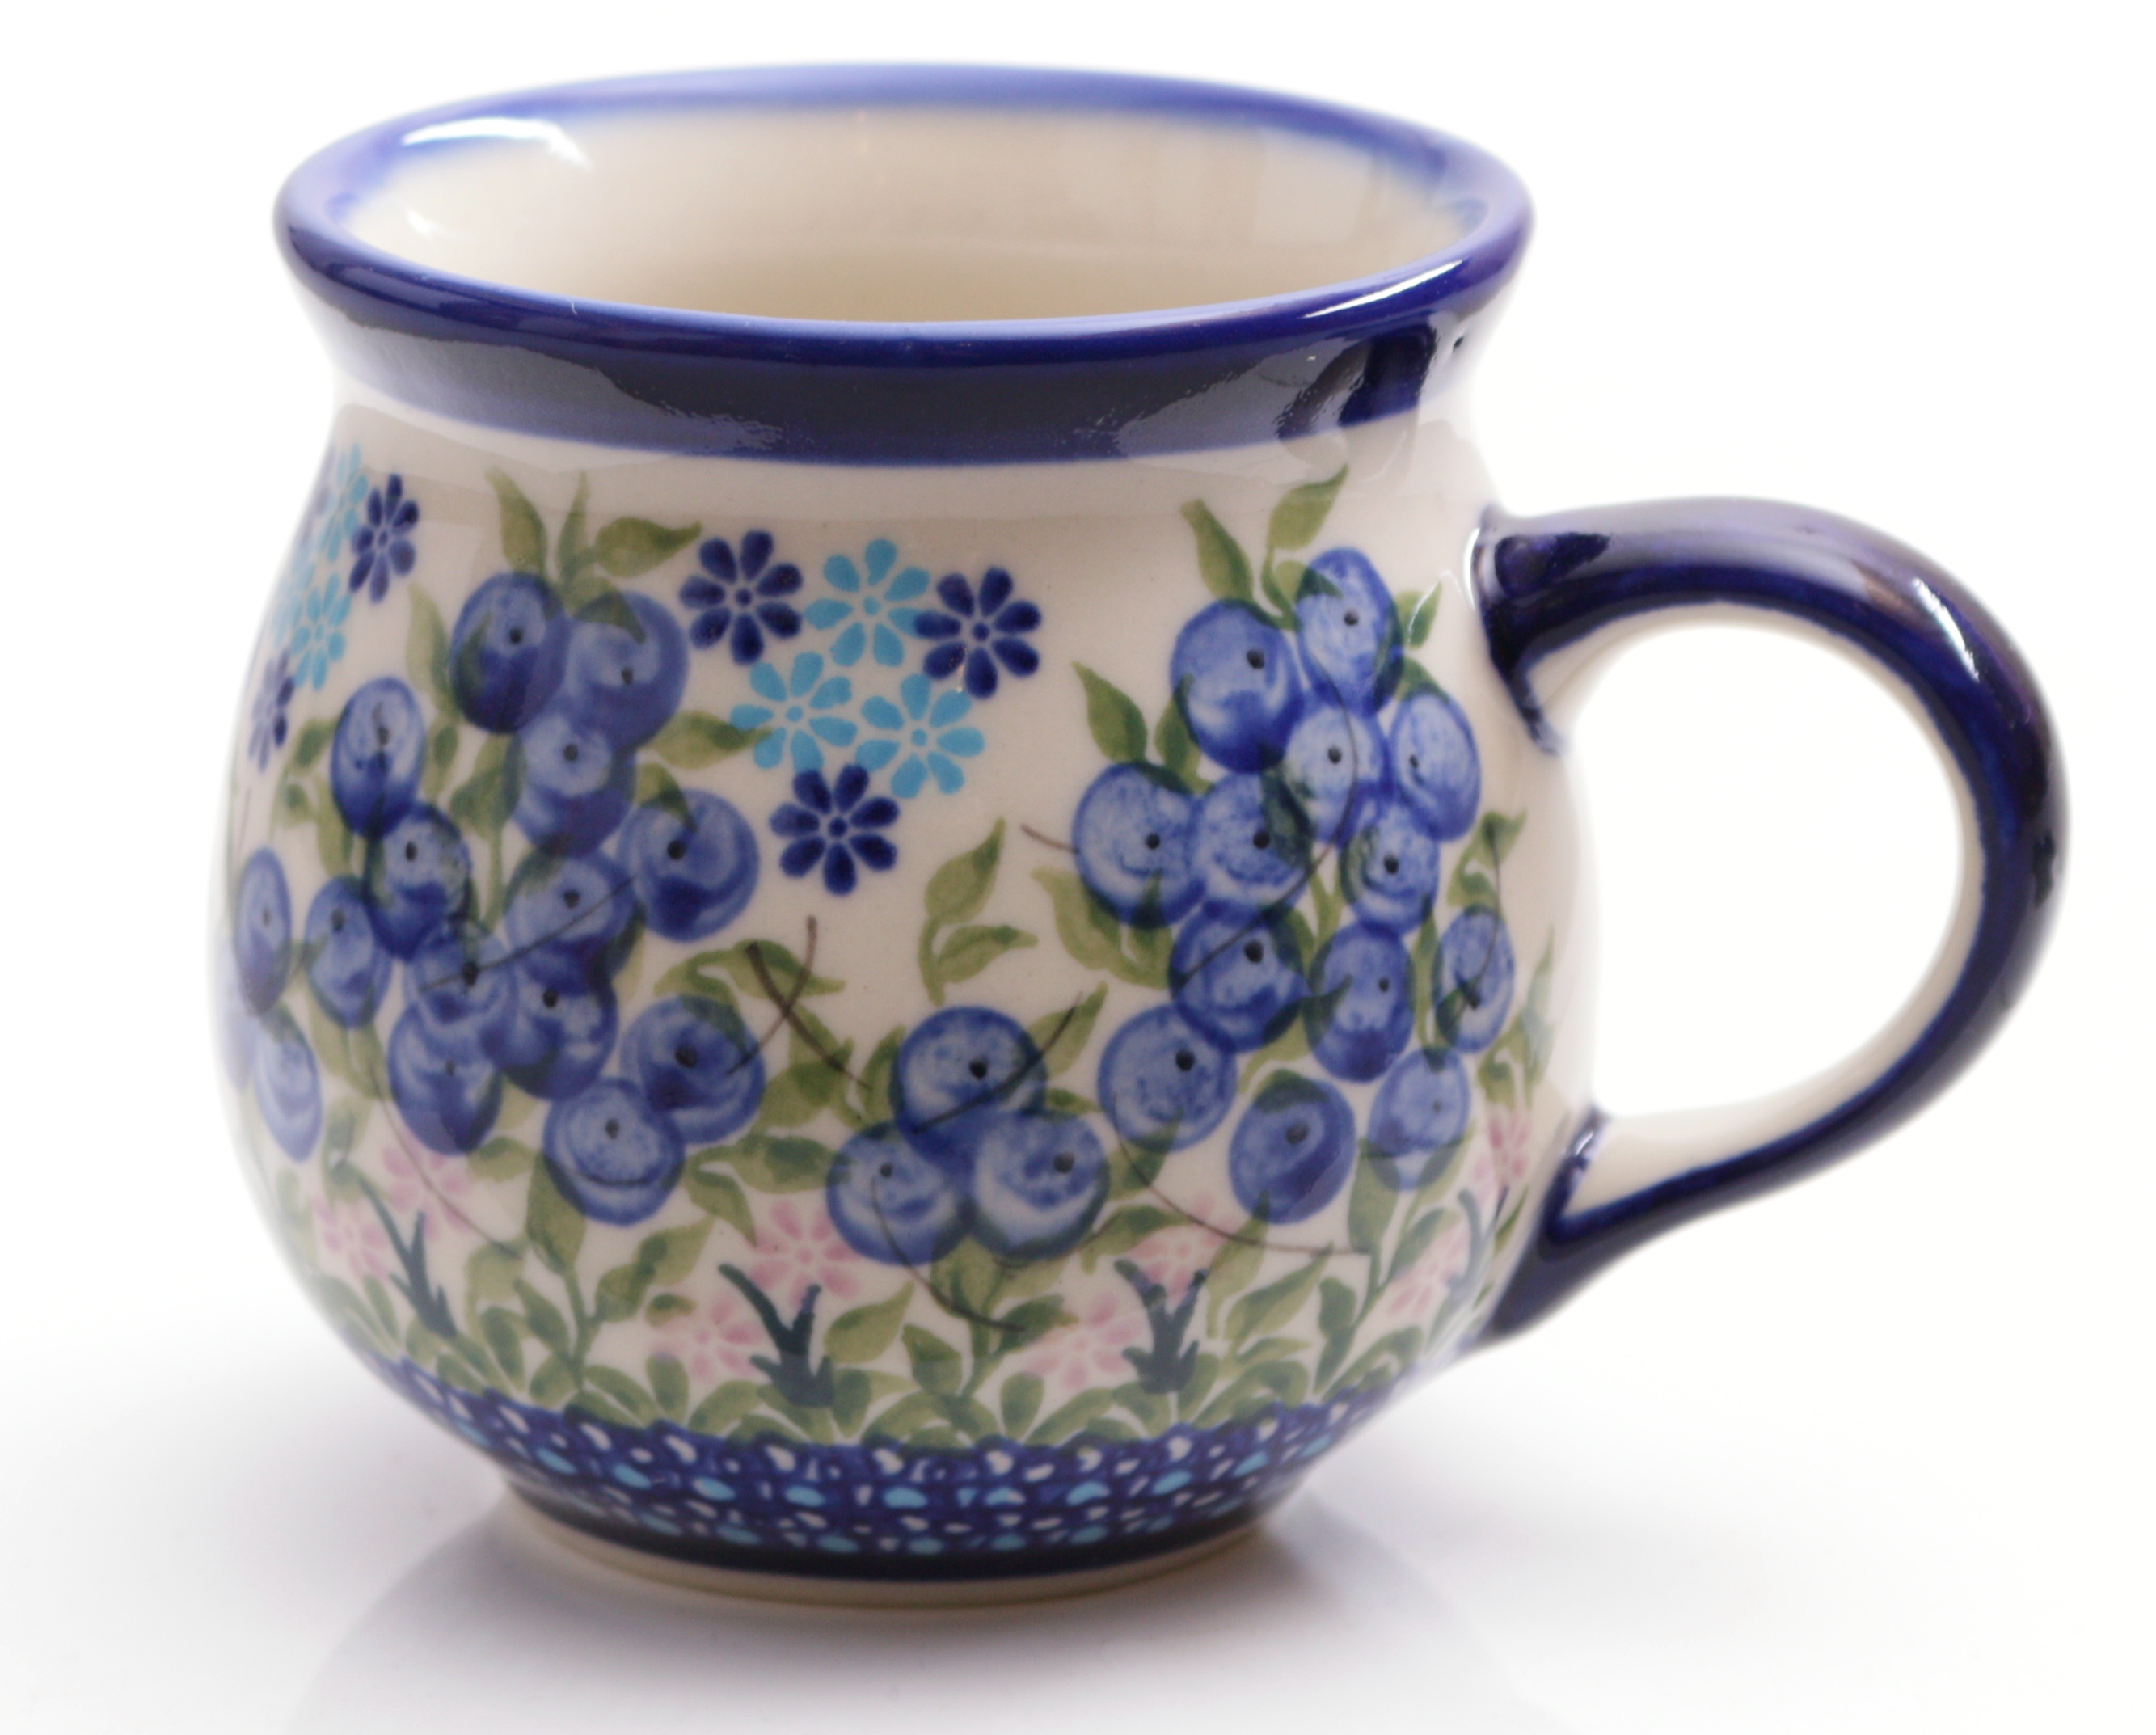 Handmade Polish Cups And Mugs From Silesia Gundara